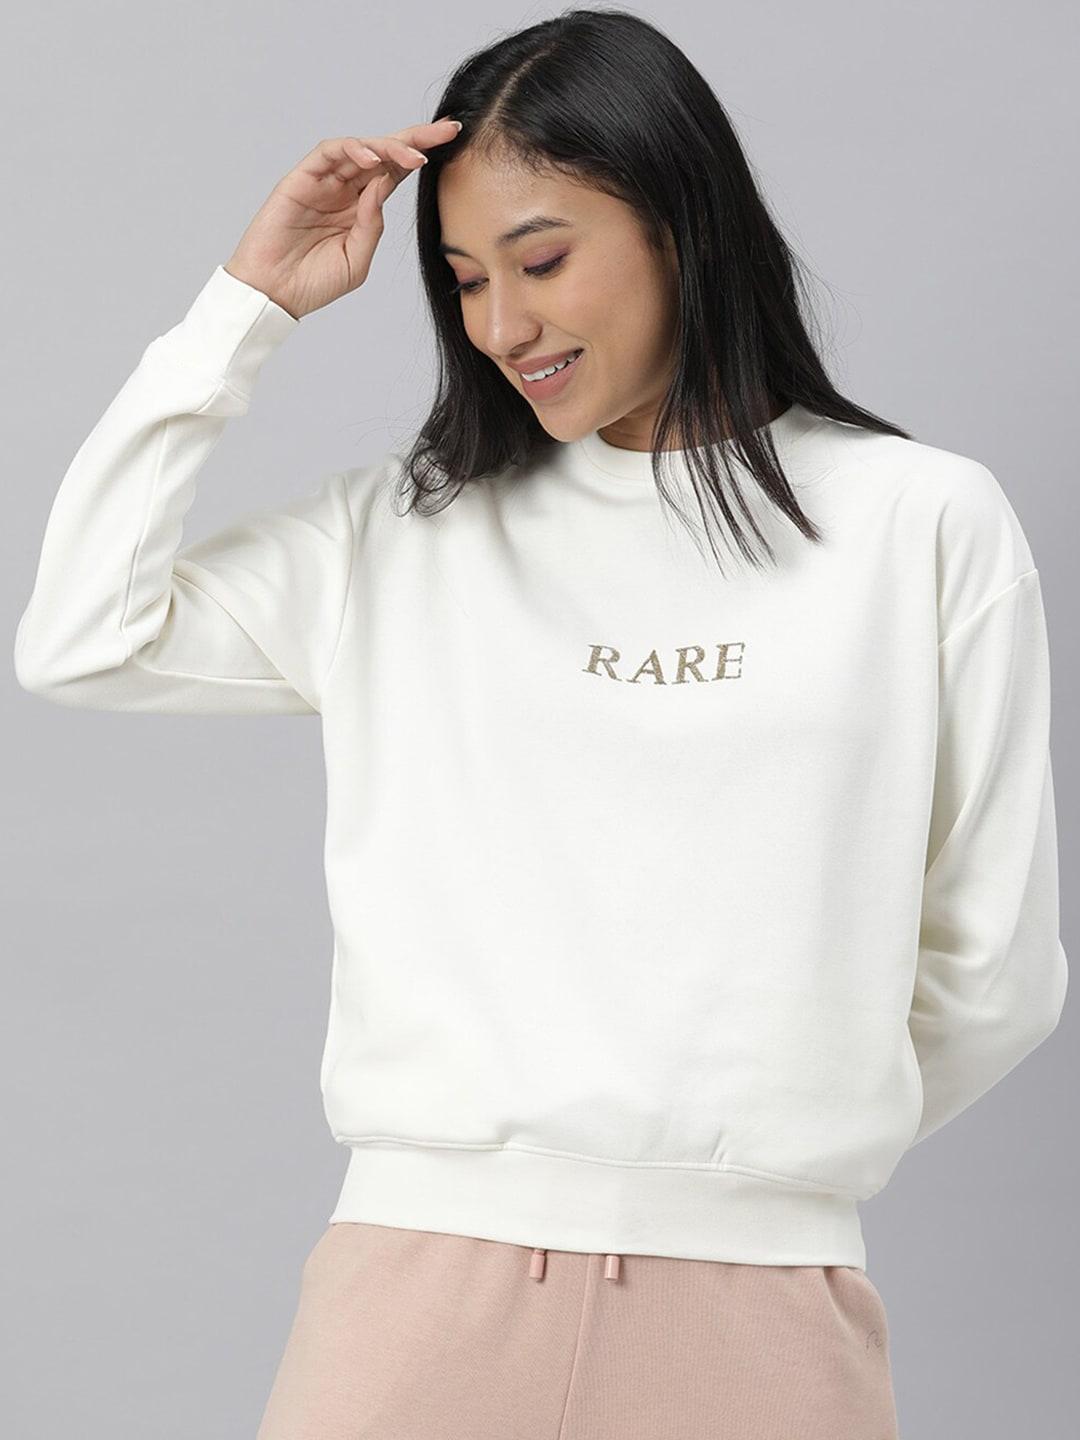 rareism-women-off-white-printed-sweatshirt